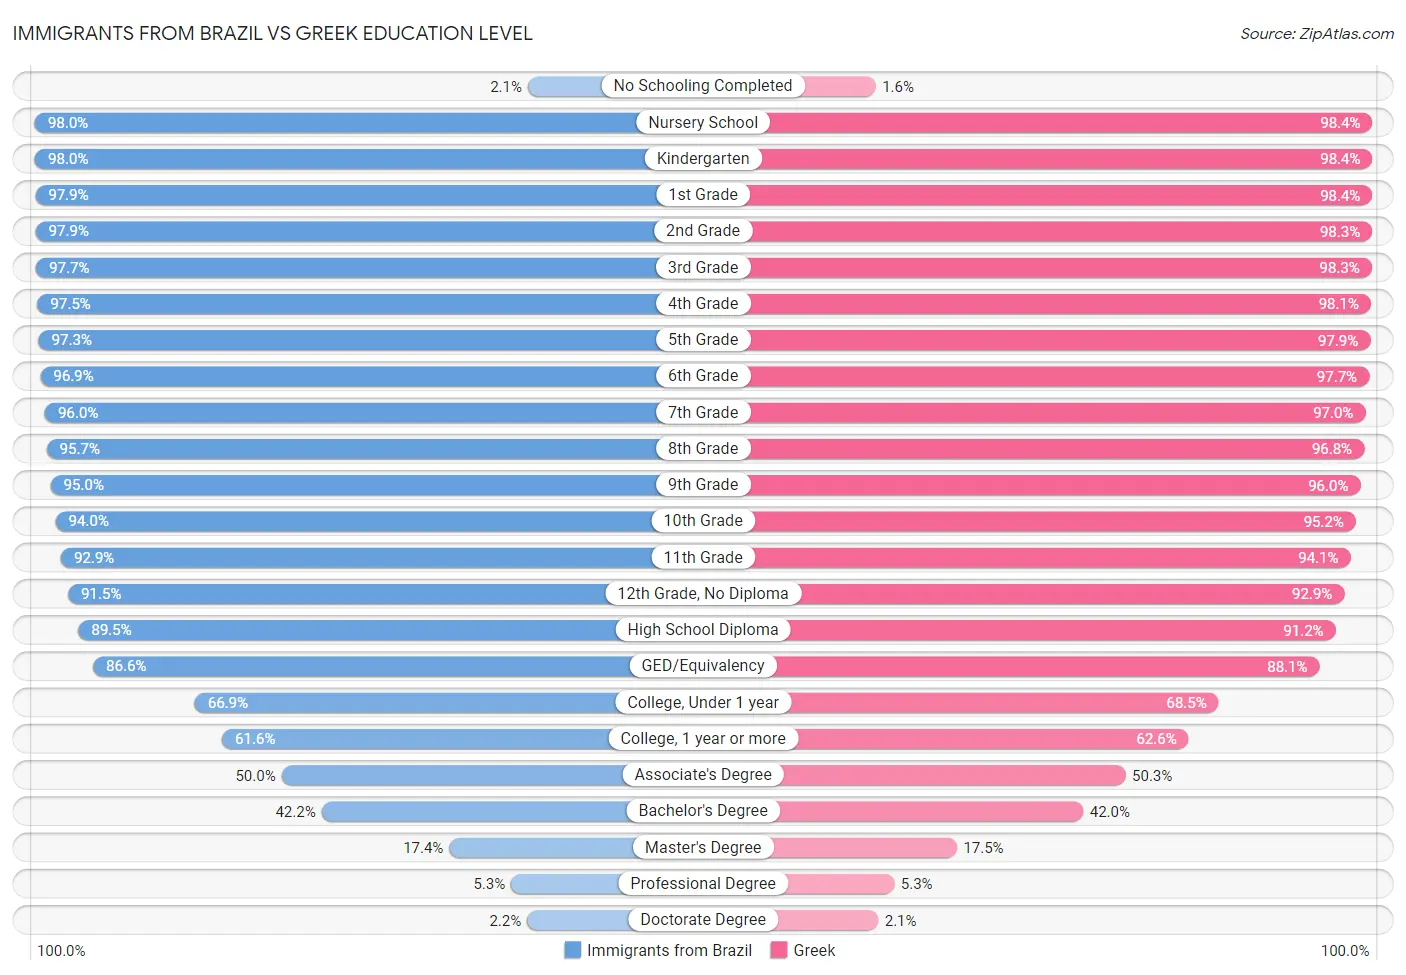 Immigrants from Brazil vs Greek Education Level